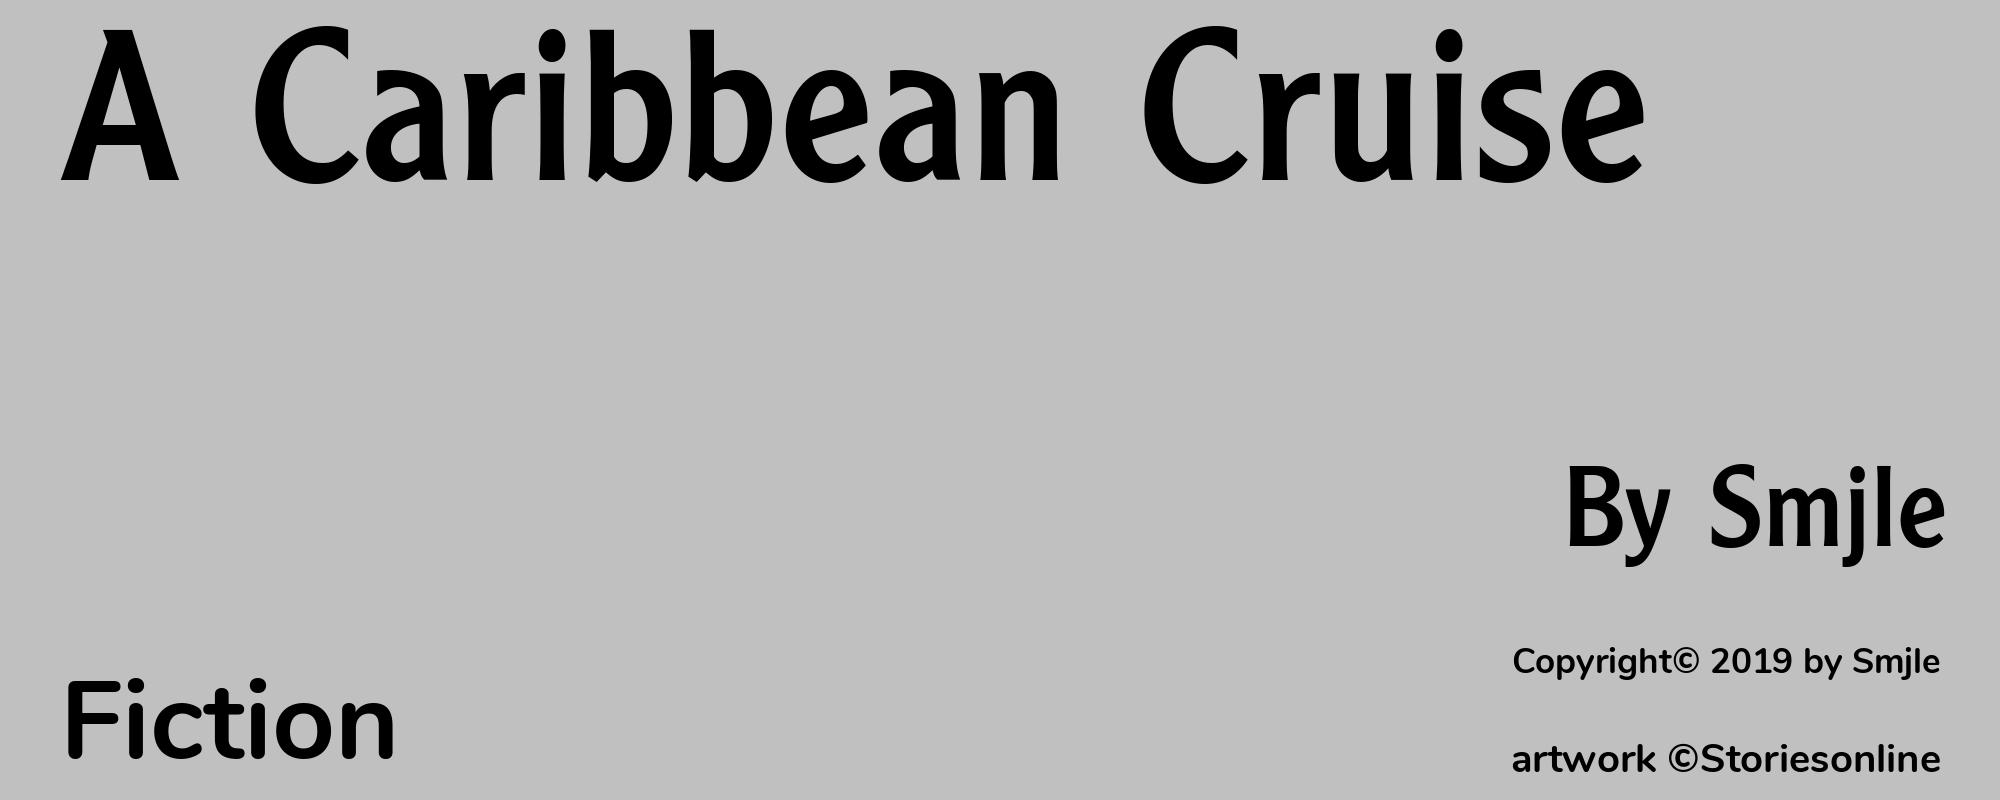 A Caribbean Cruise - Cover